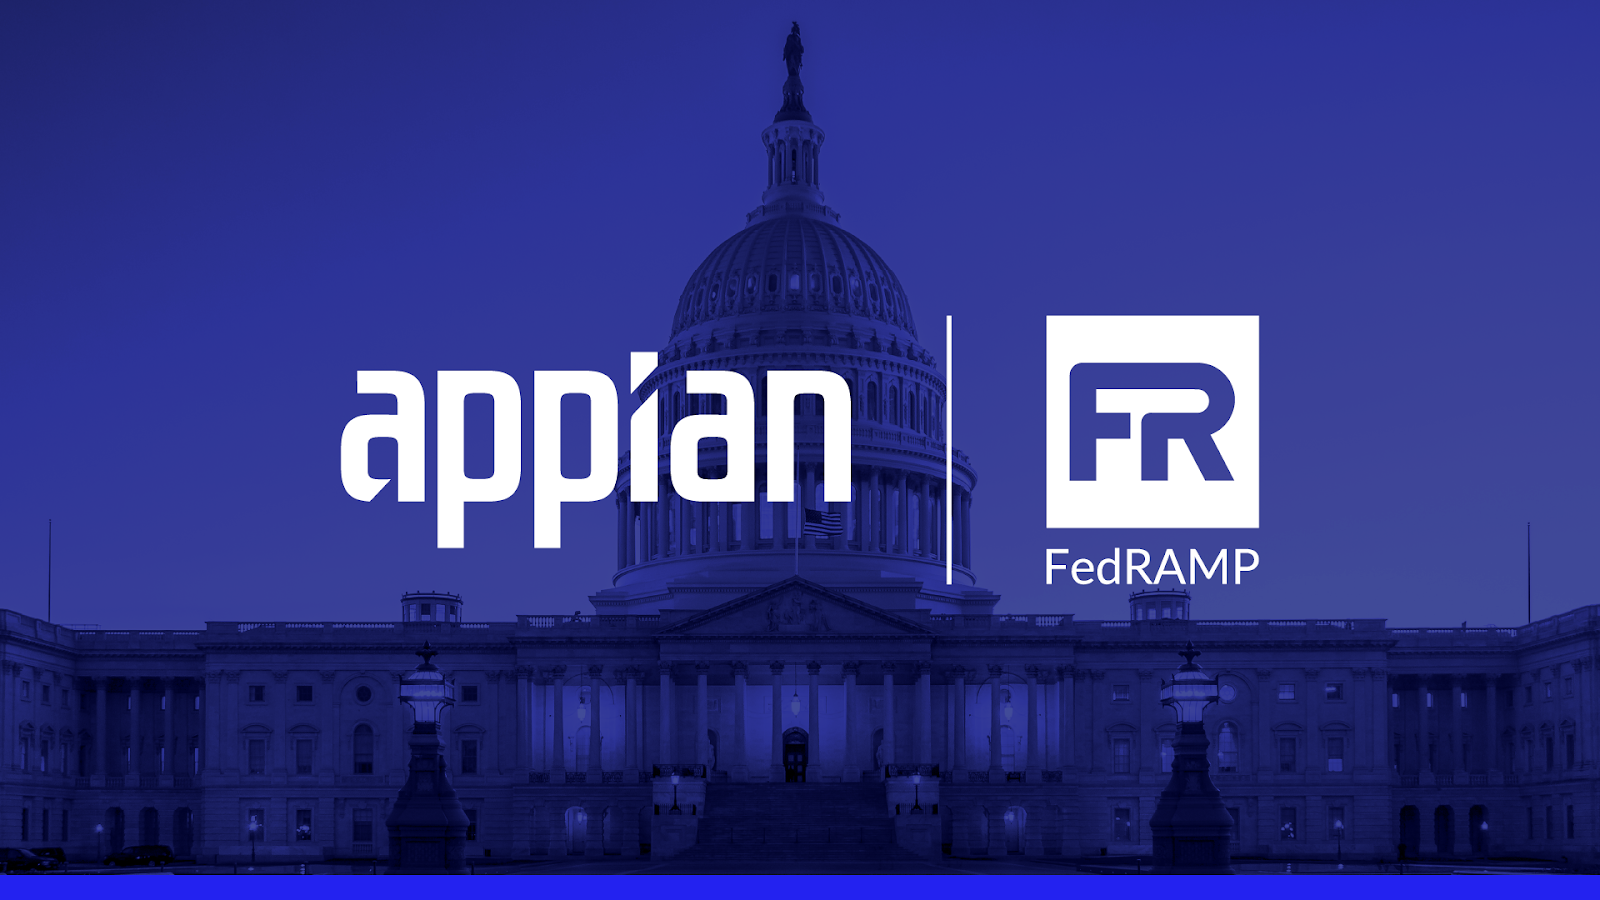 Appian and FedRAMP branding image